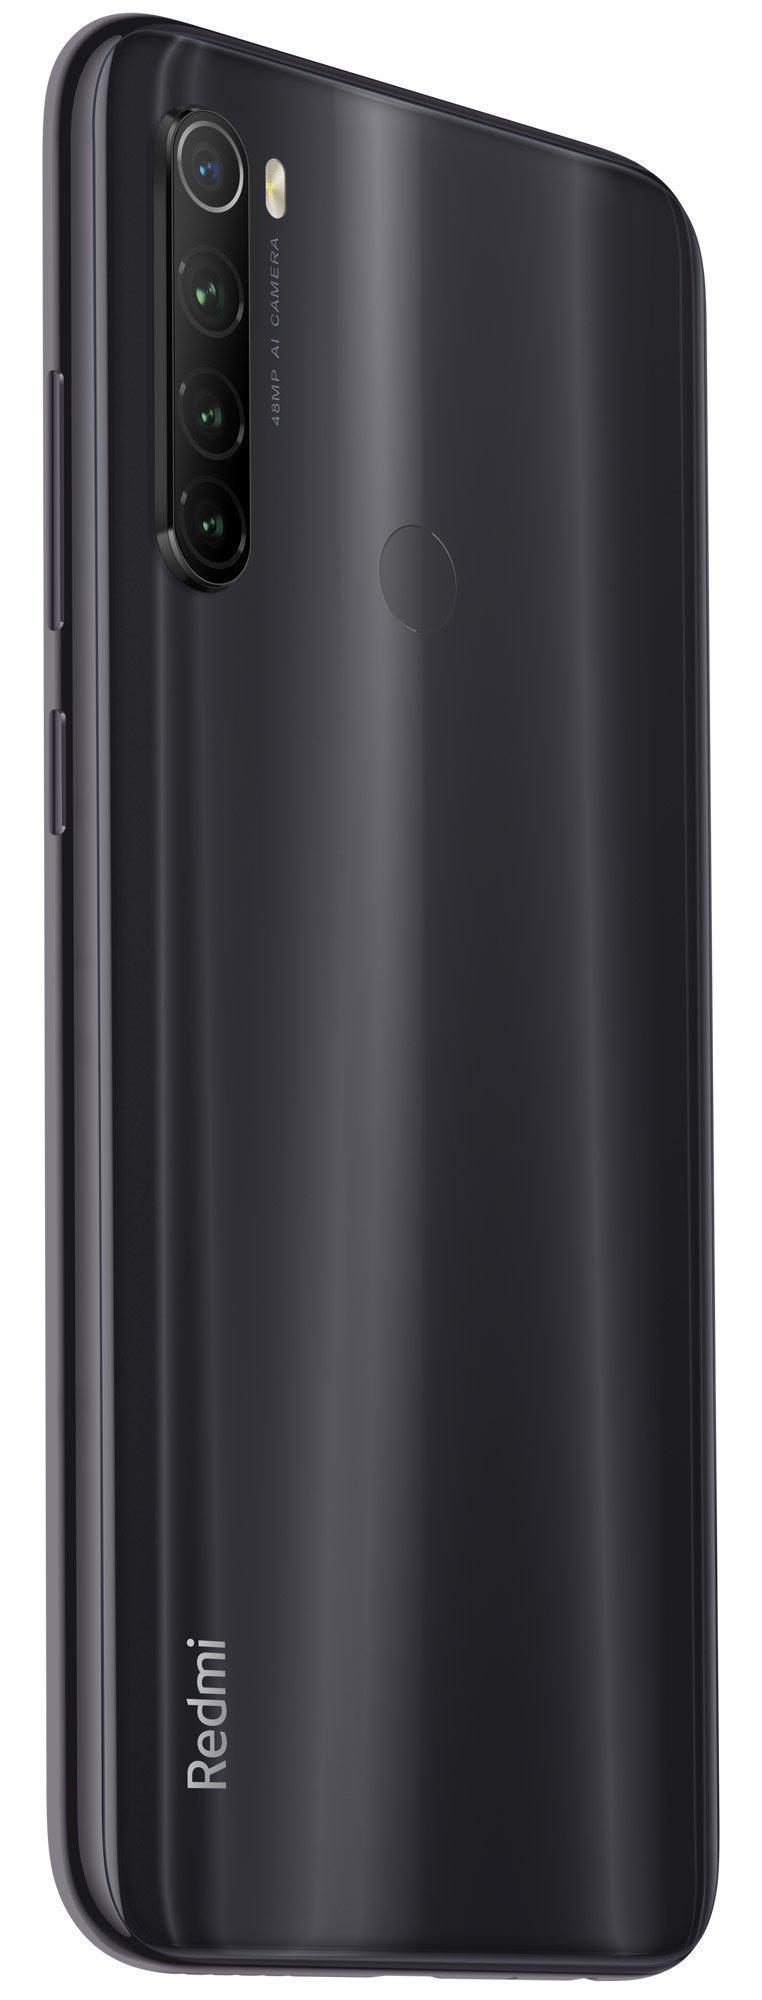 Смартфон Xiaomi Redmi Note 8T 4/64Gb Black заказать